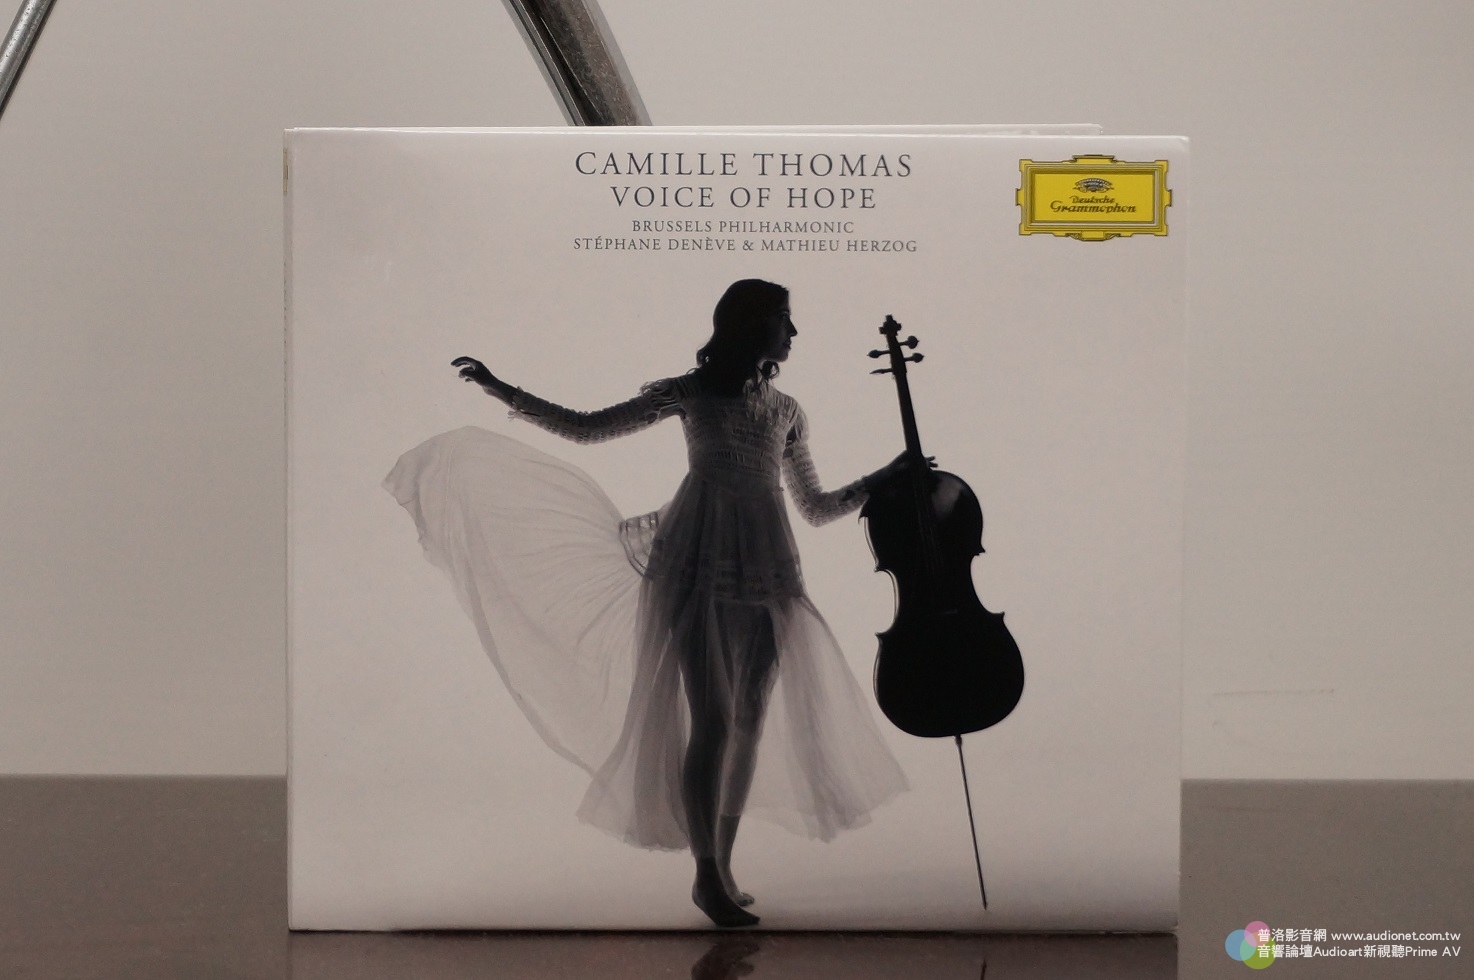 Camille Thomas Voice of Hope，DG近40年來首簽女大提琴家帶來希望之聲